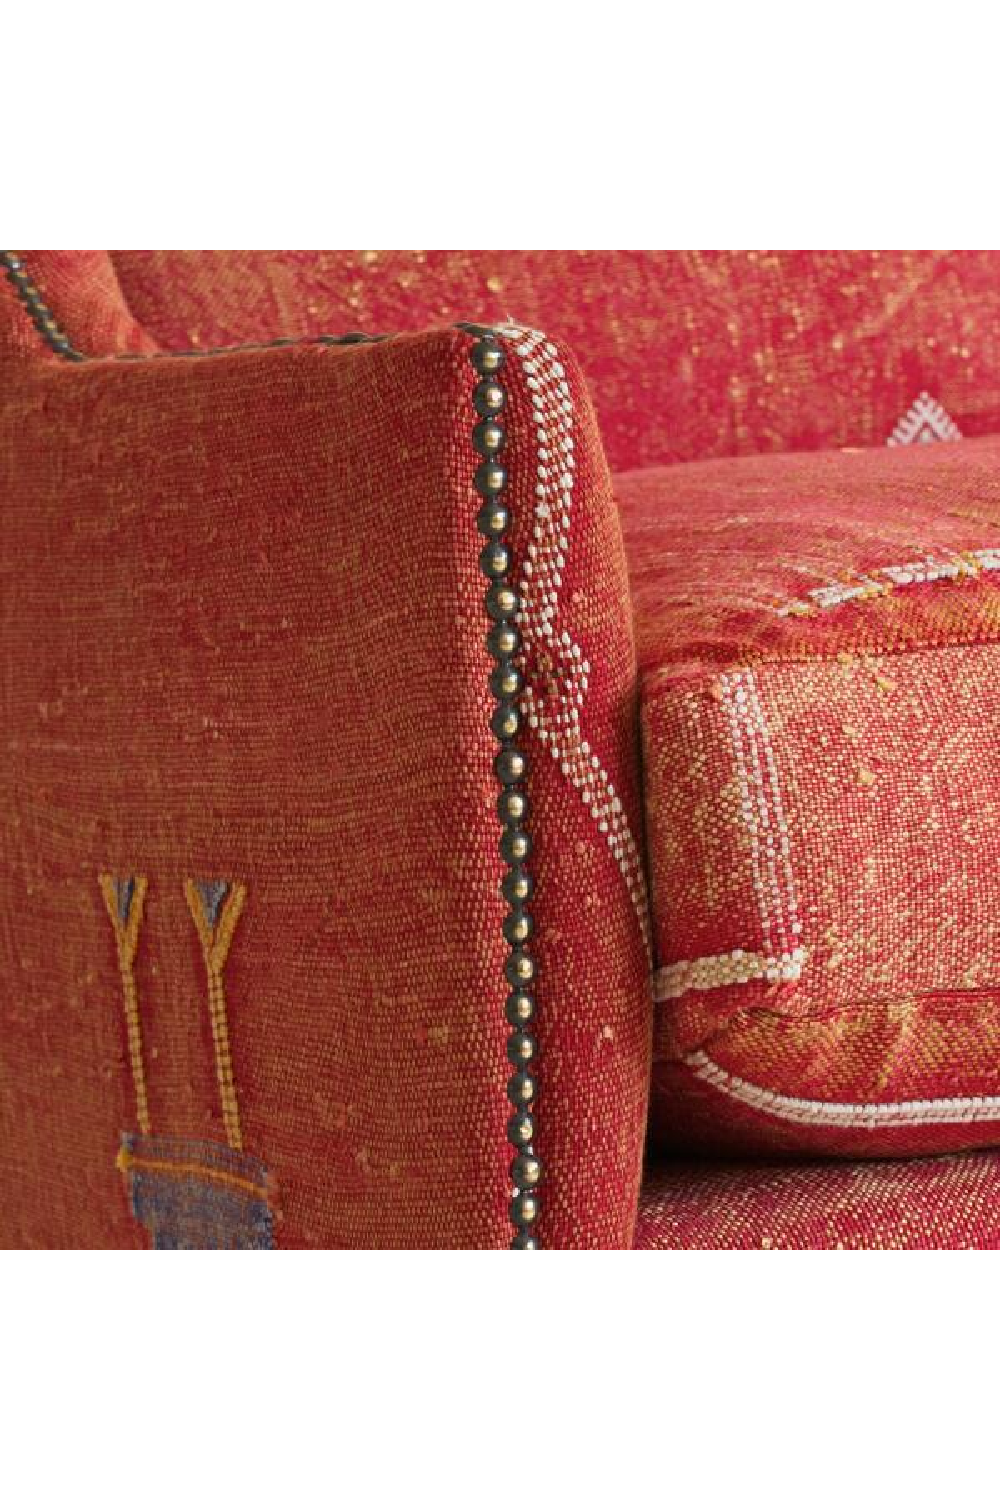 Upholstered Boho Sofa | Andrew Martin Regal | Oroa.com